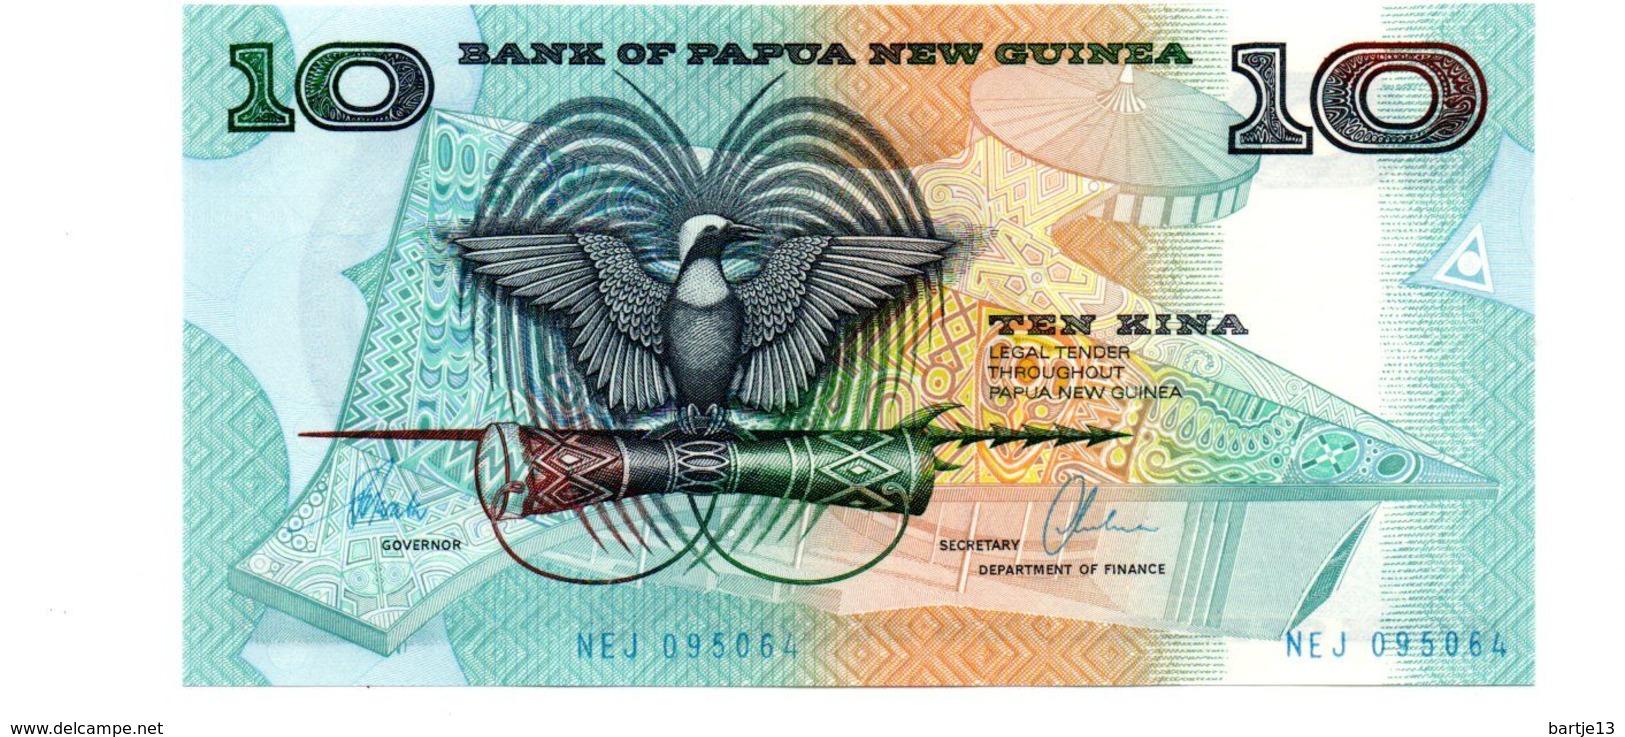 PAPOEA NIEUW GUINEA 10 KINA PICK 9d UNCIRCULATED - Papua-Neuguinea